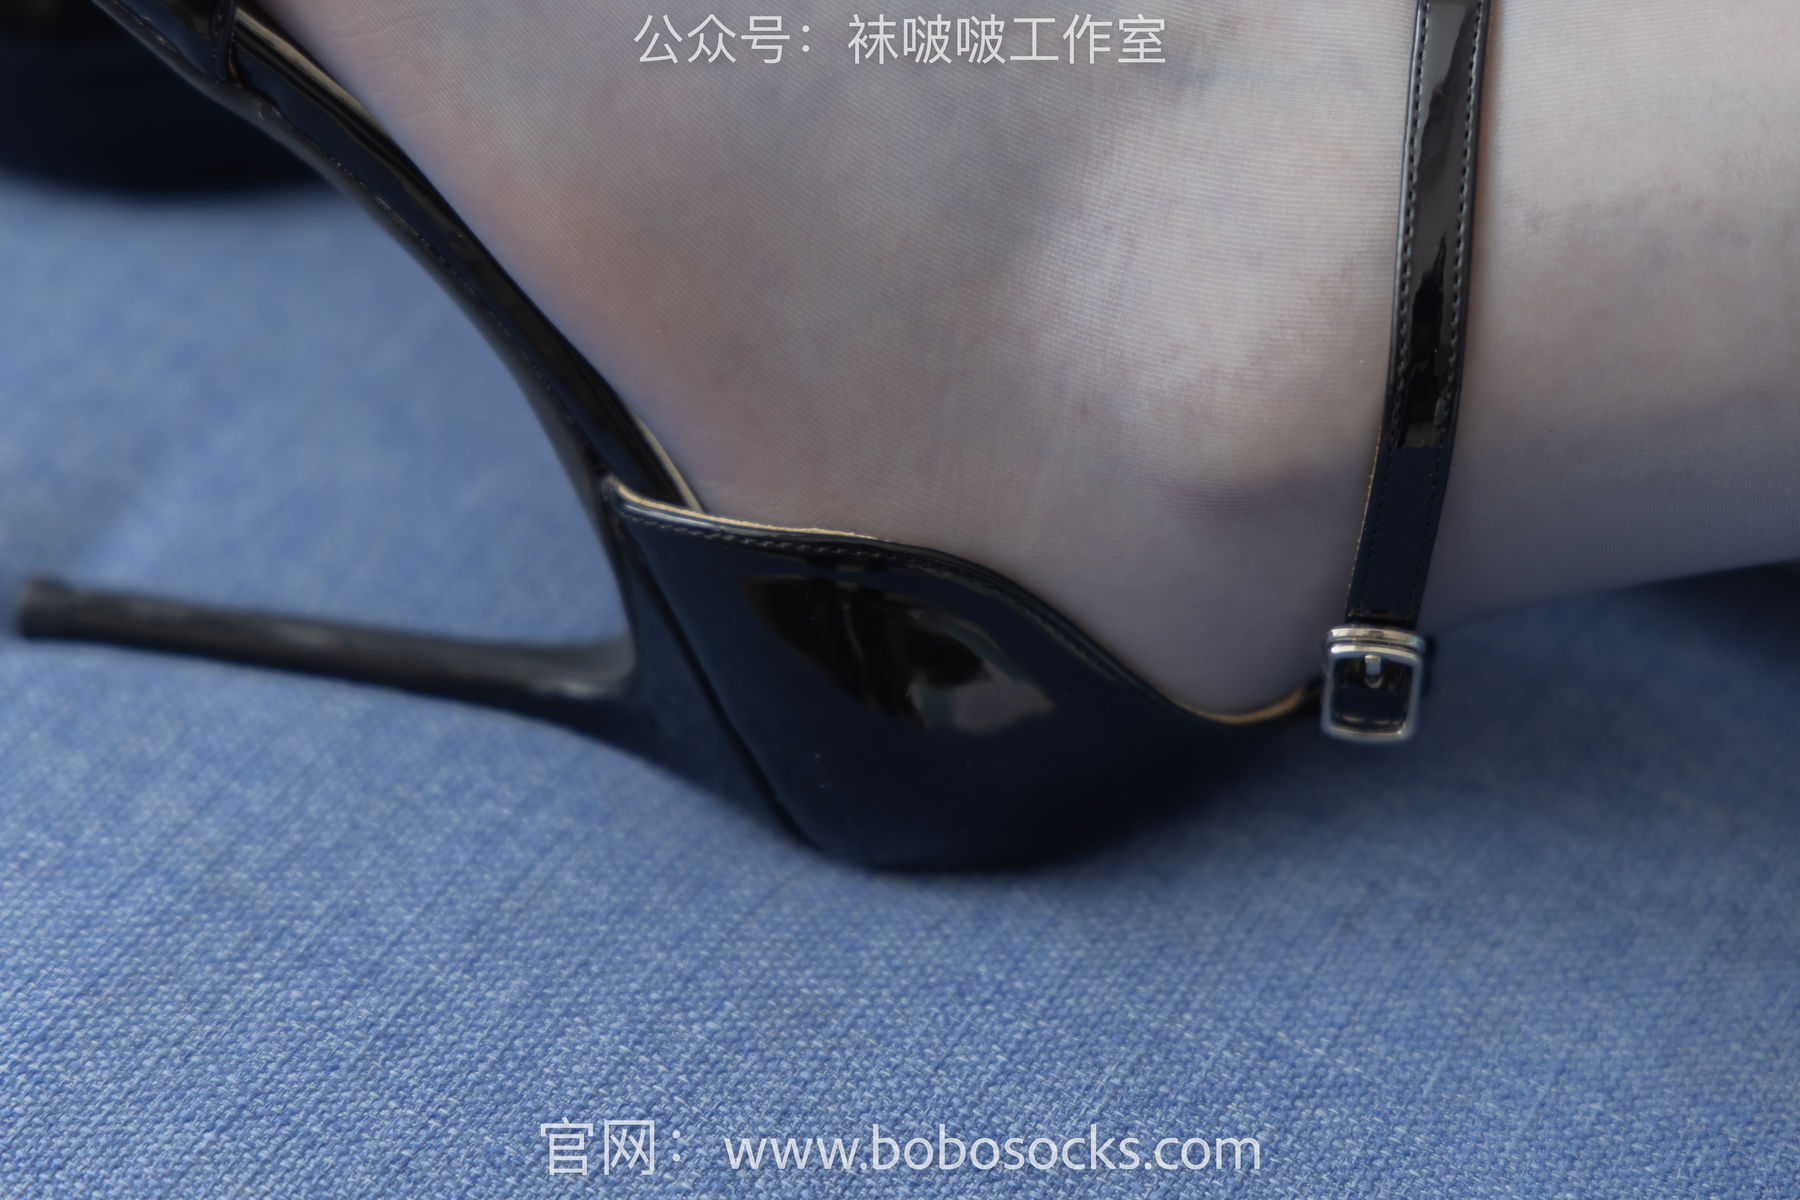 BoBoSocks袜啵啵 No.105 小甜豆-空姐制服、高跟鞋、蓝色丝袜/(140P)